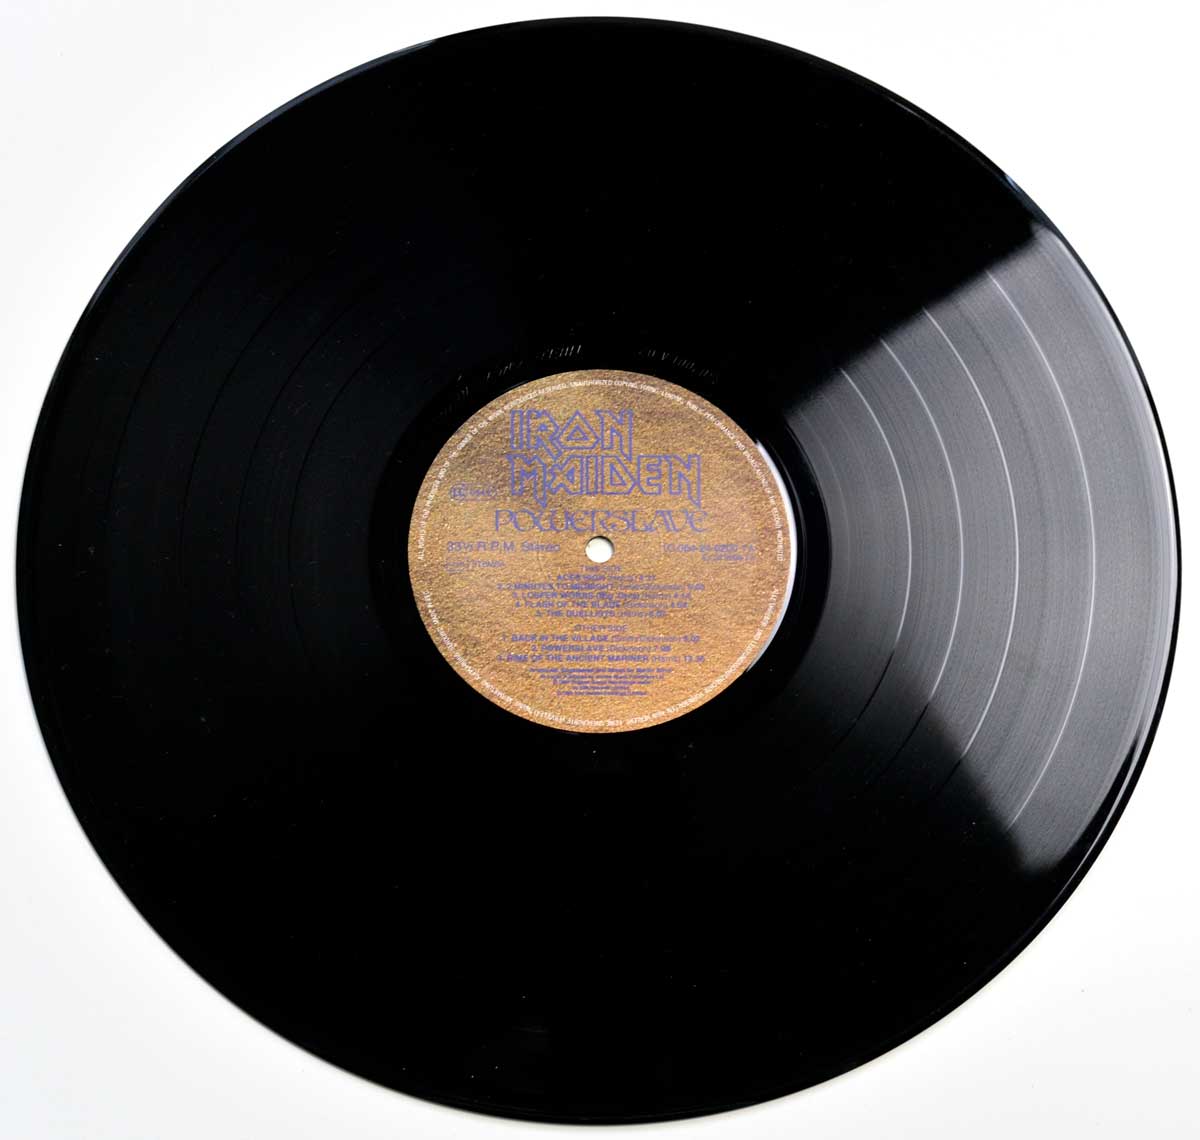 Photo of "IRON MAIDEN - Powerslave OIS EU DE" 12" LP Record - Side Two: